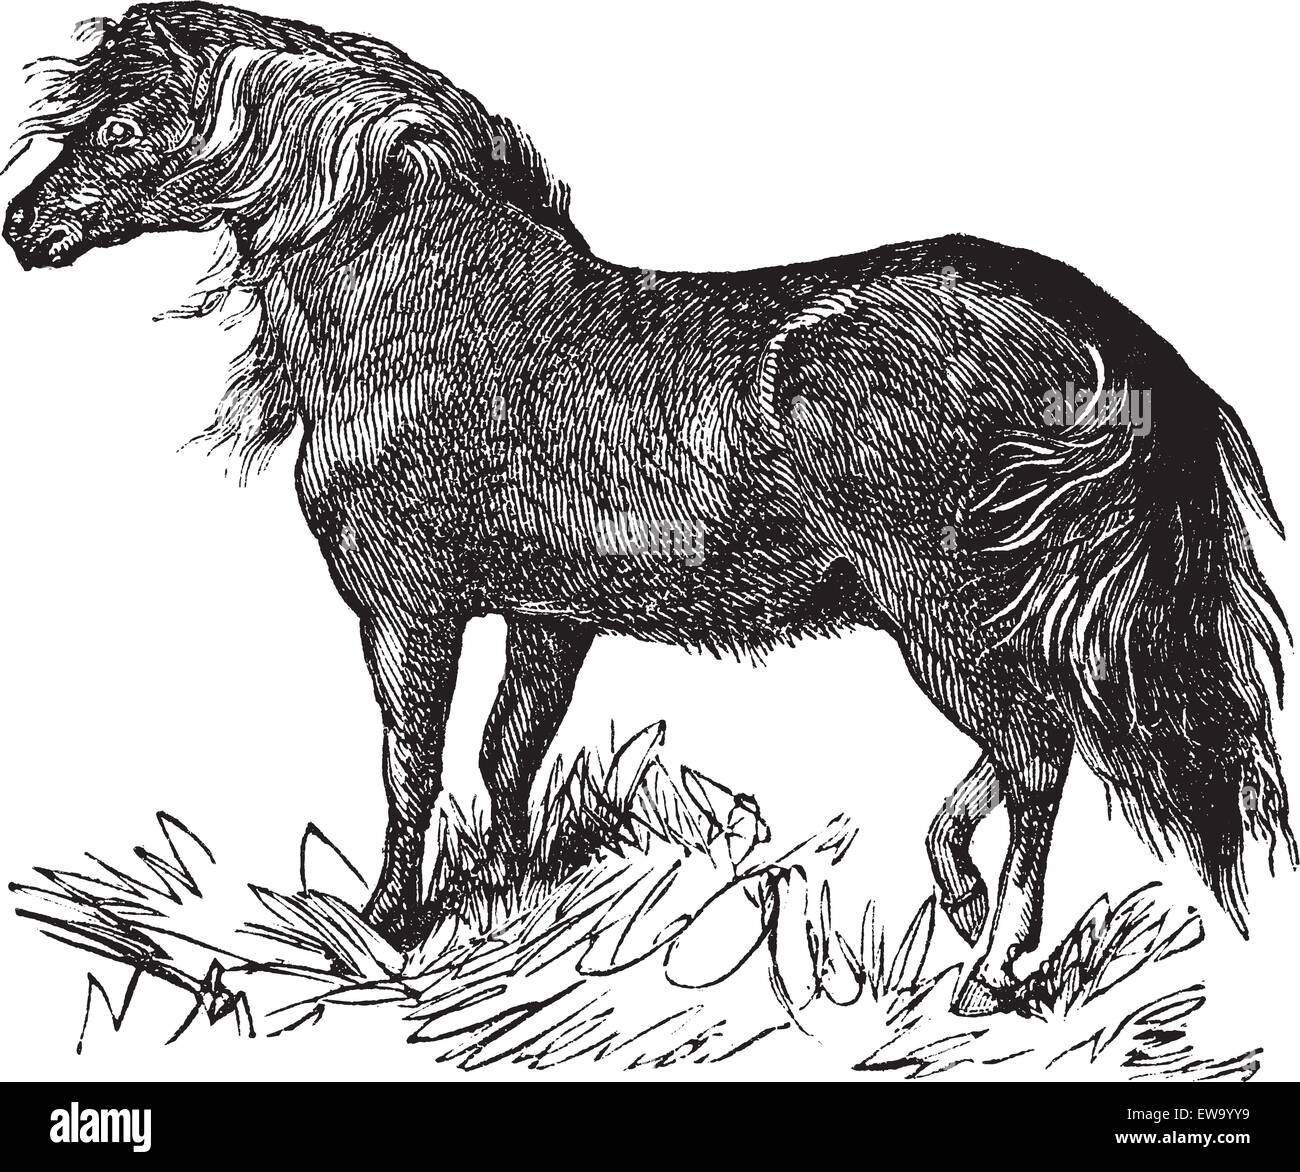 Shetland Pony or Equus ferus caballus, vintage engraving. Old engraved illustration of a Shetland Pony. Stock Vector